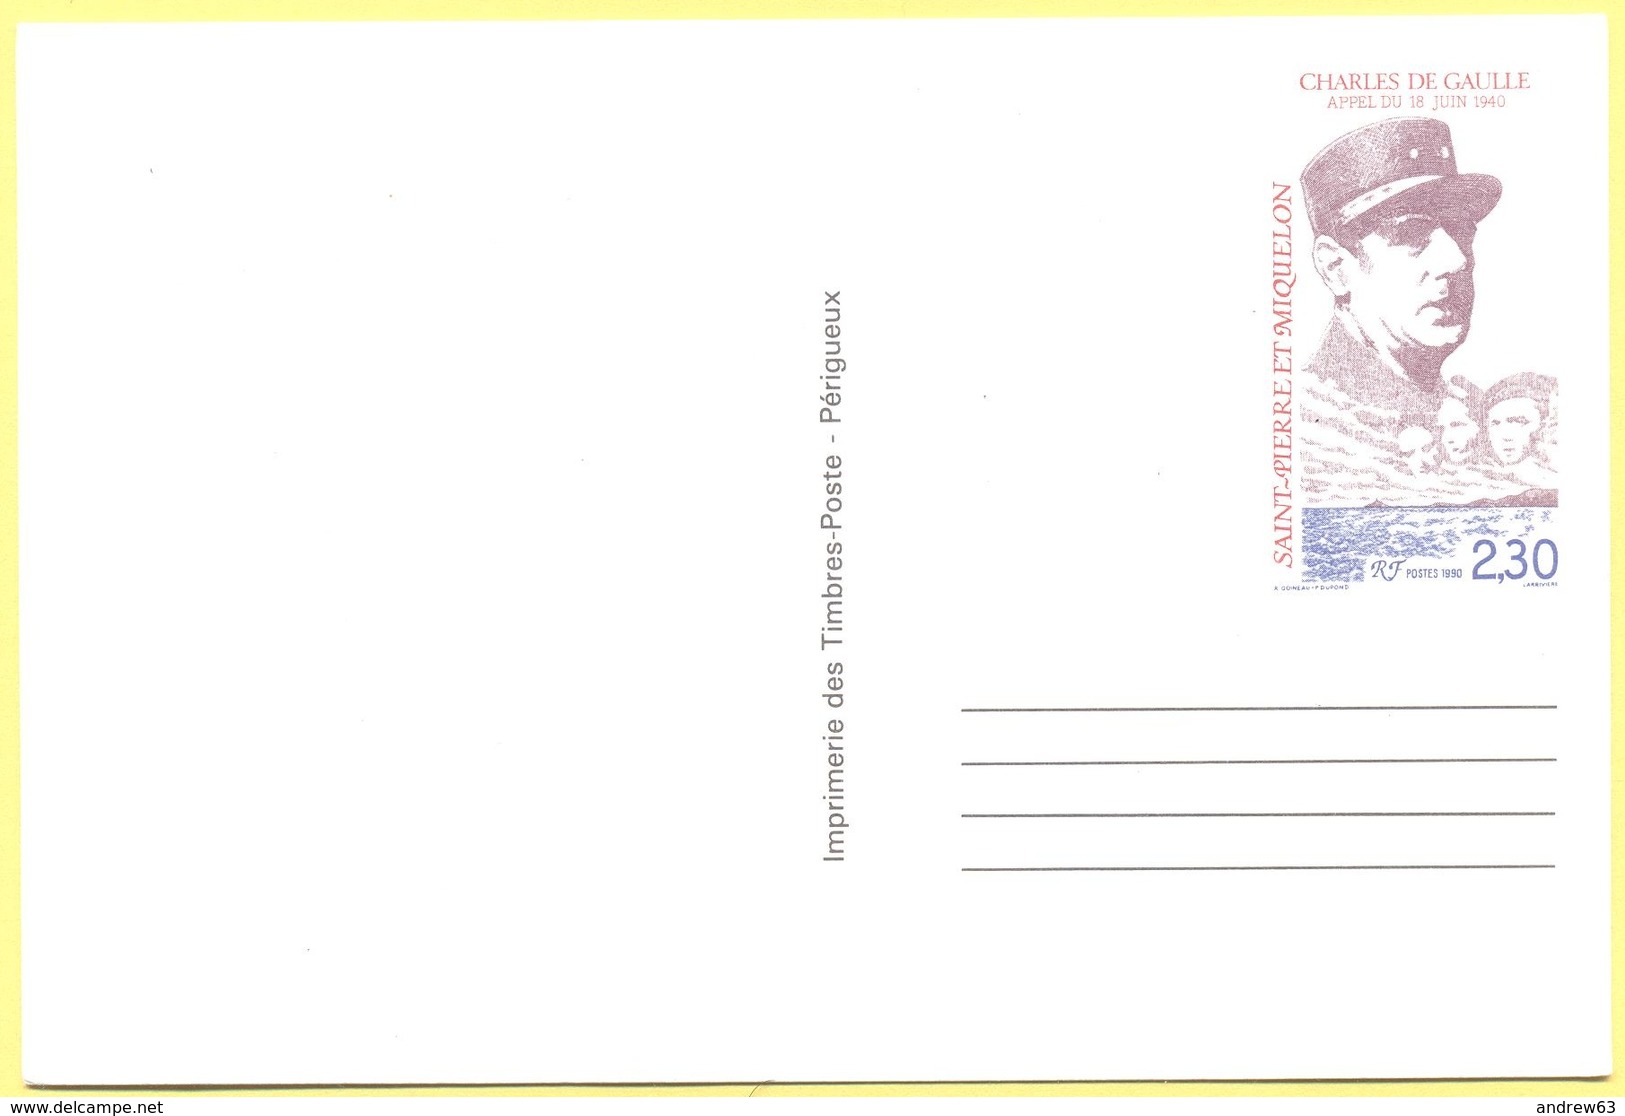 St.Pierre & Miquelon - 2,30 Charles De Gaulle - Carte Postale - Intero Postale - Entier Postal - Postal Stationery - Not - Postwaardestukken